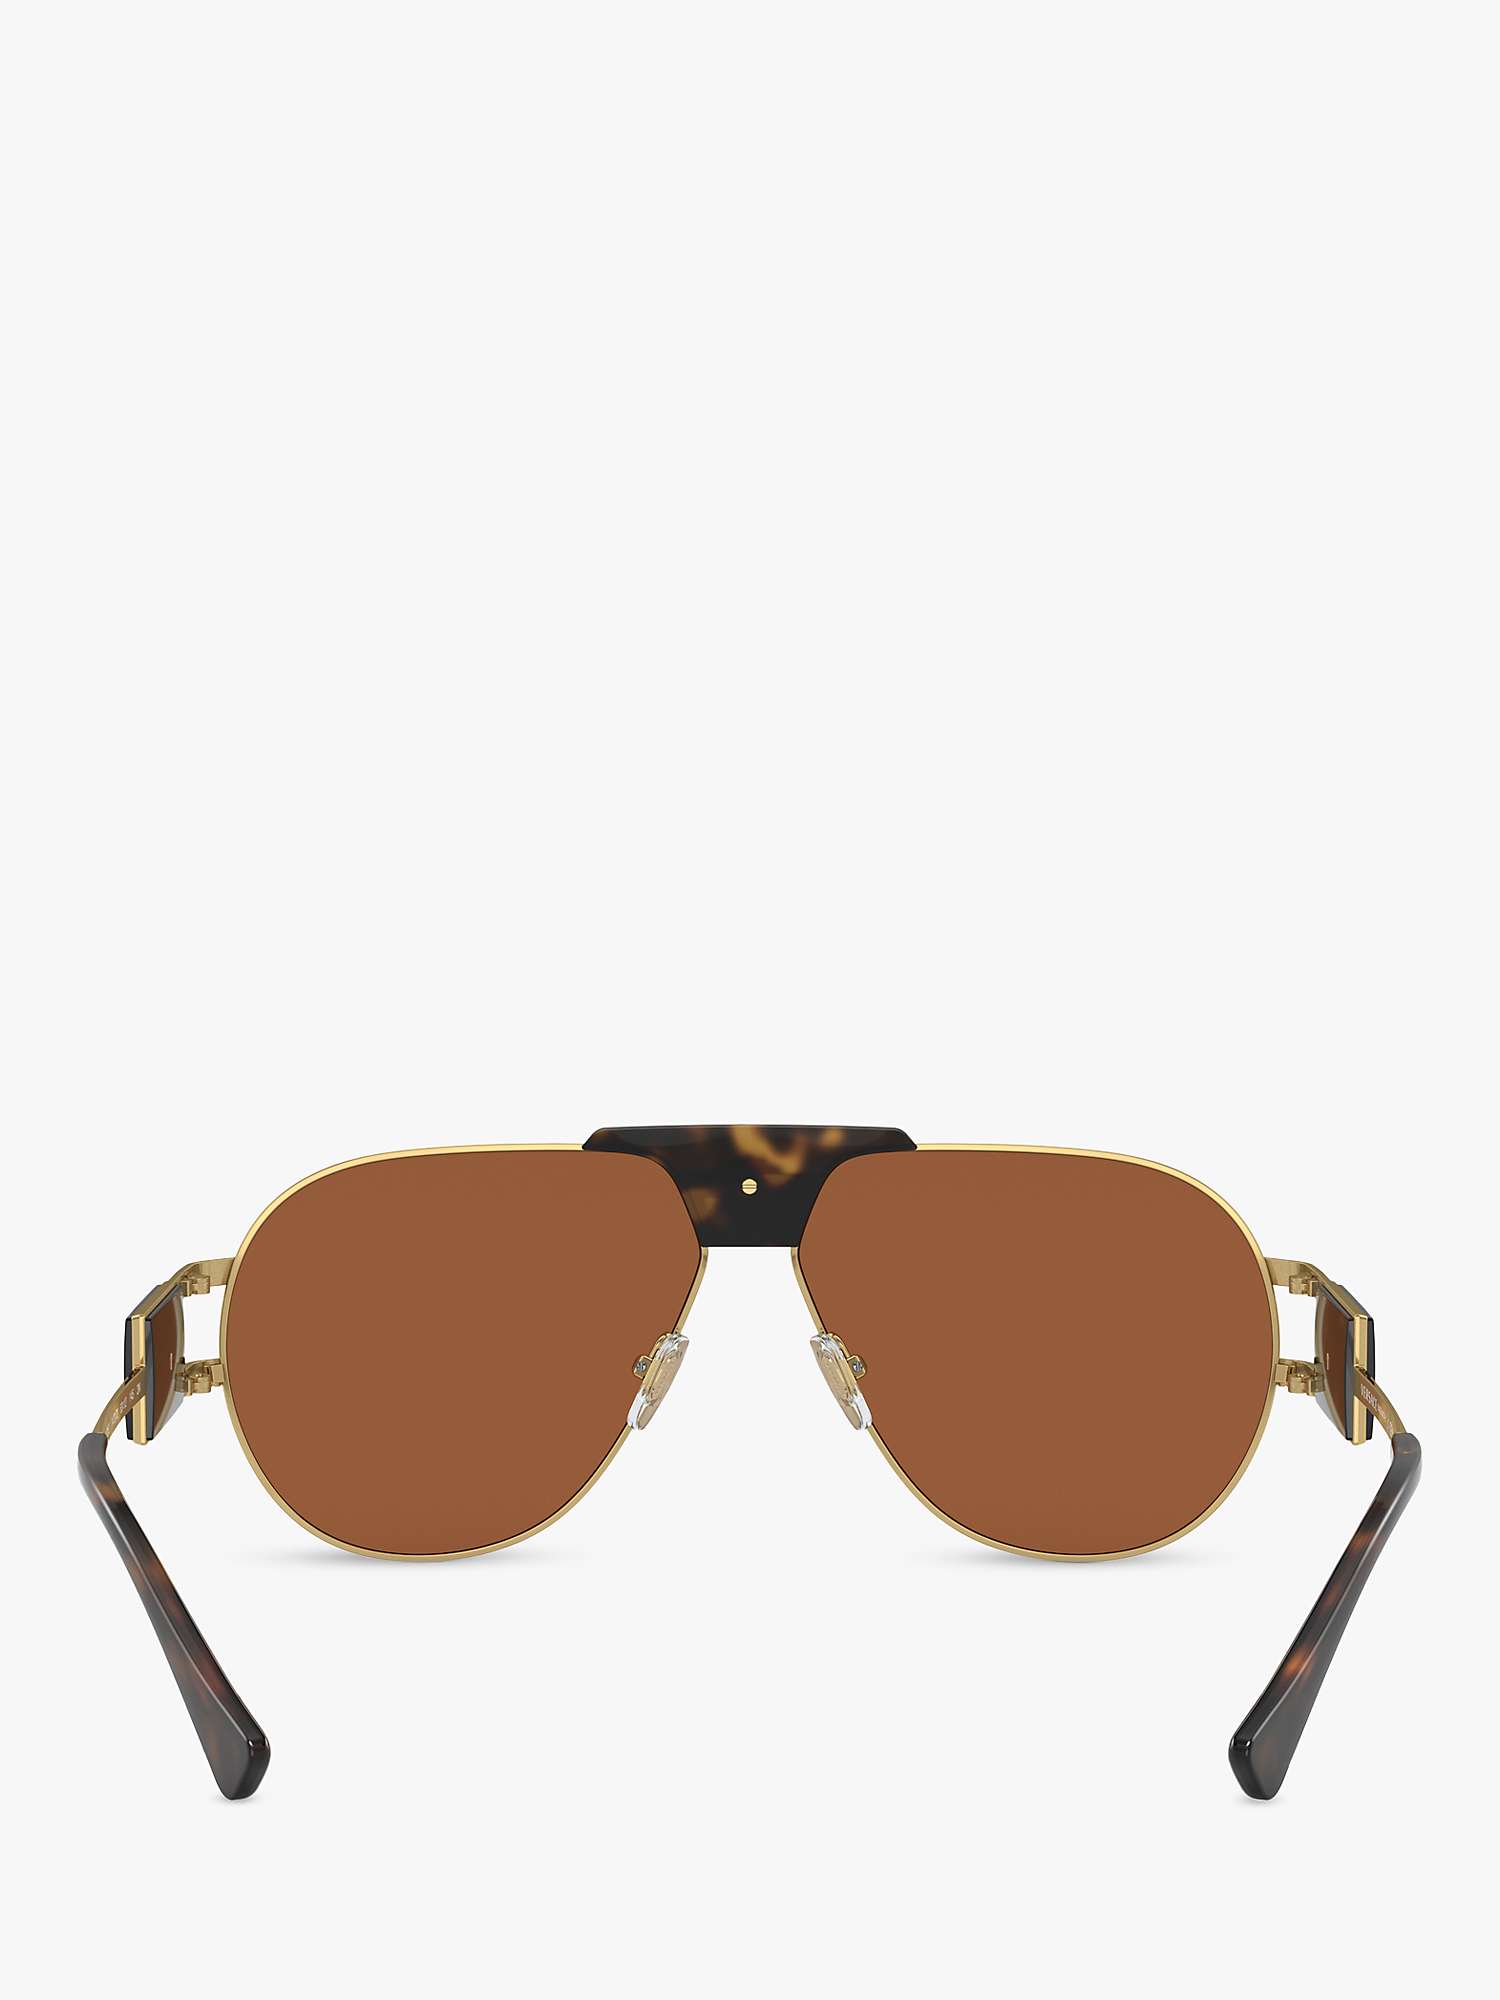 Buy Versace VE2252 Men's Aviator Sunglasses, Gold/Brown Online at johnlewis.com